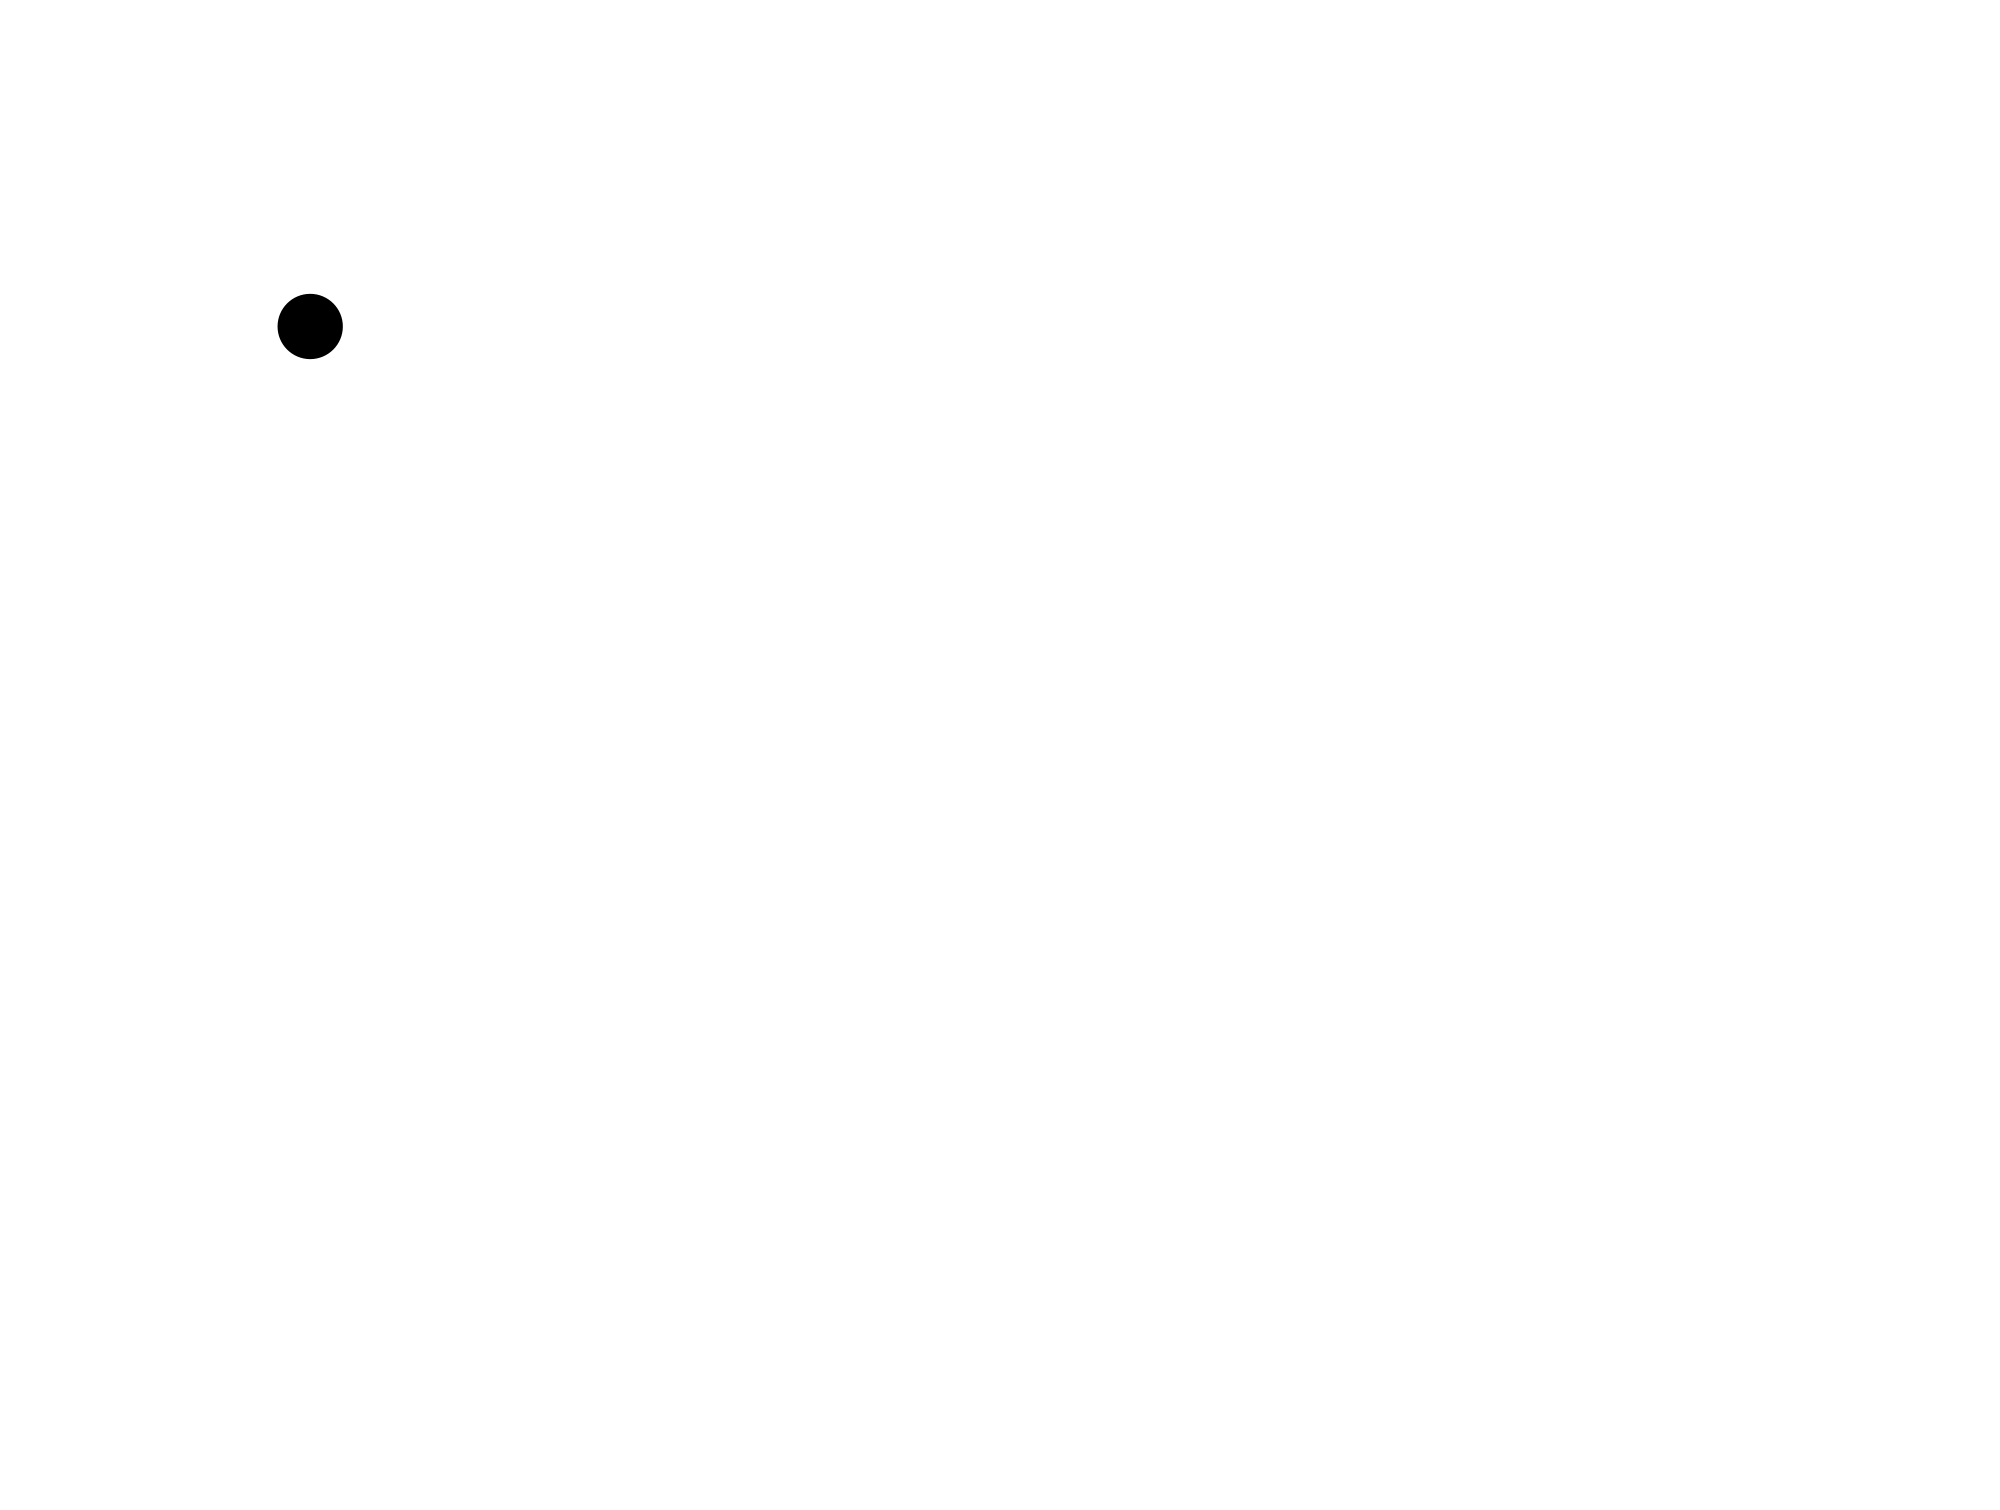 File:Center dot symbol transparent.svg - Wikimedia Commons